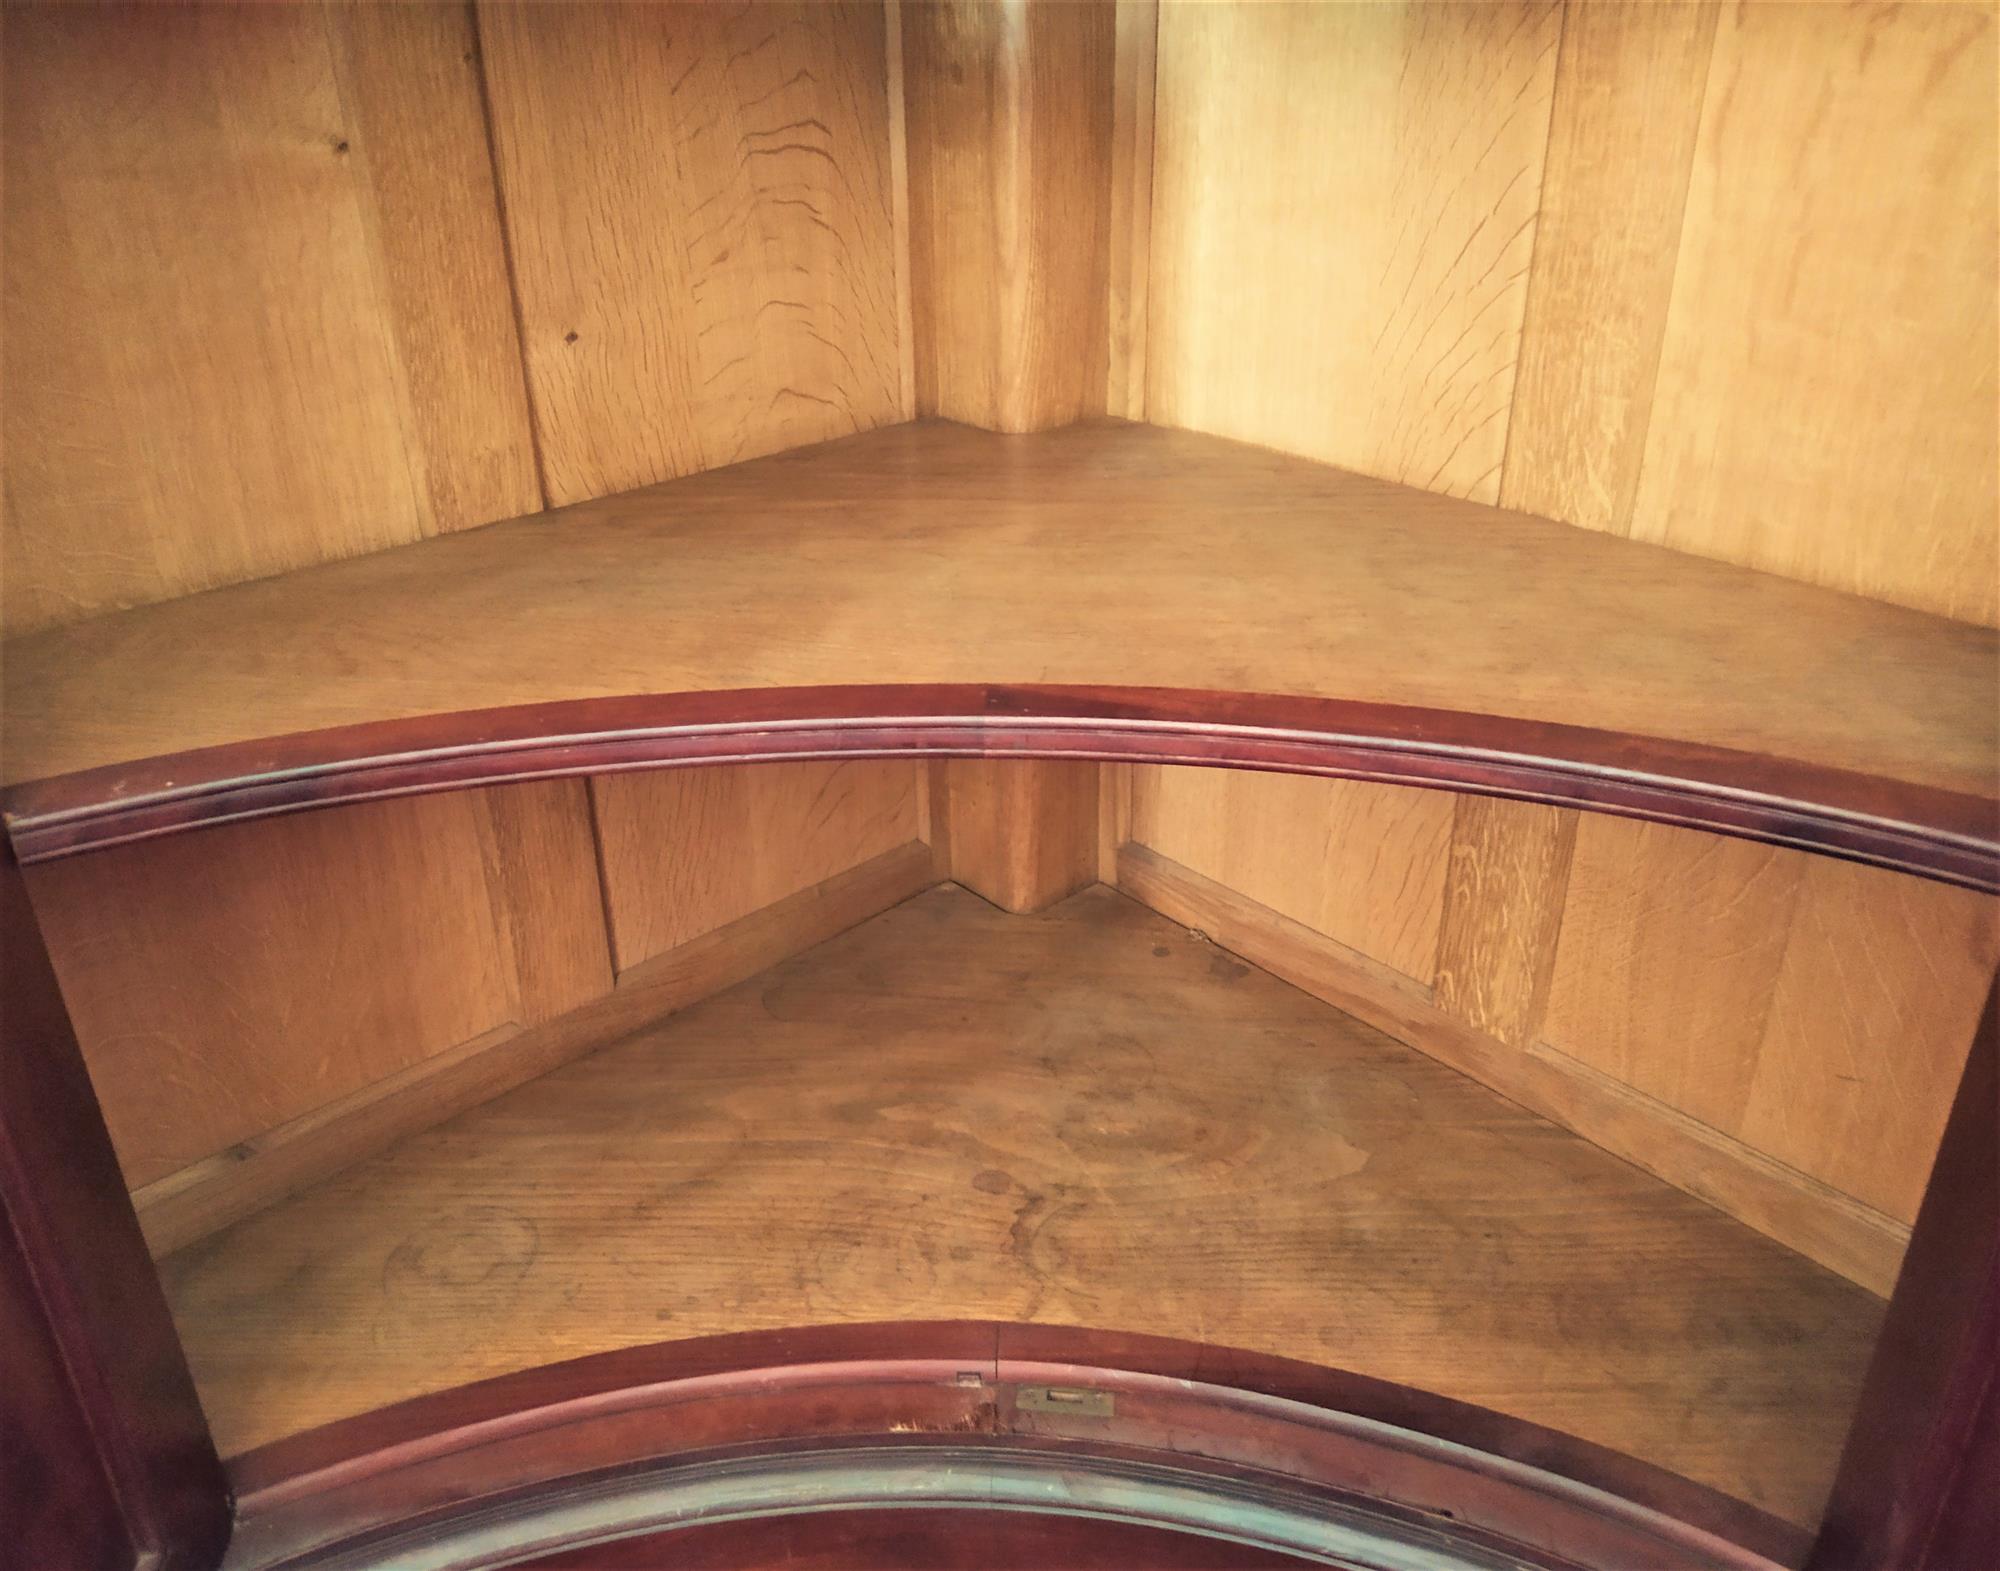 Curved corner cabinet